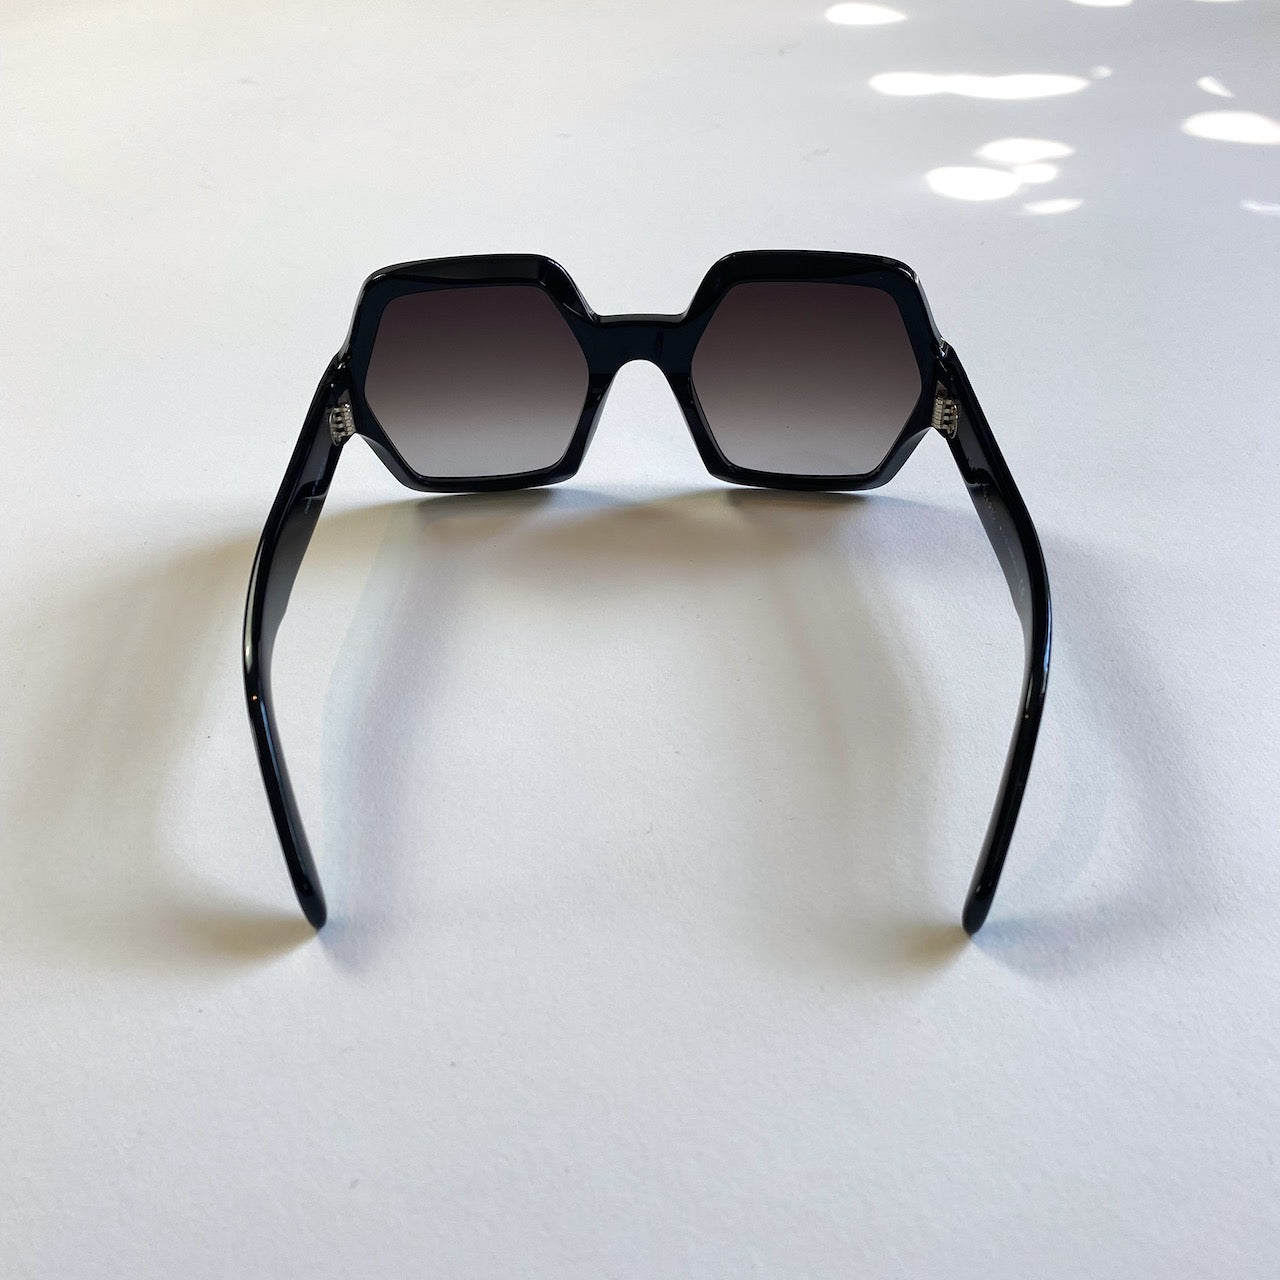 Sunglasses Cl40104i - Celine - Purchase on Ventis.